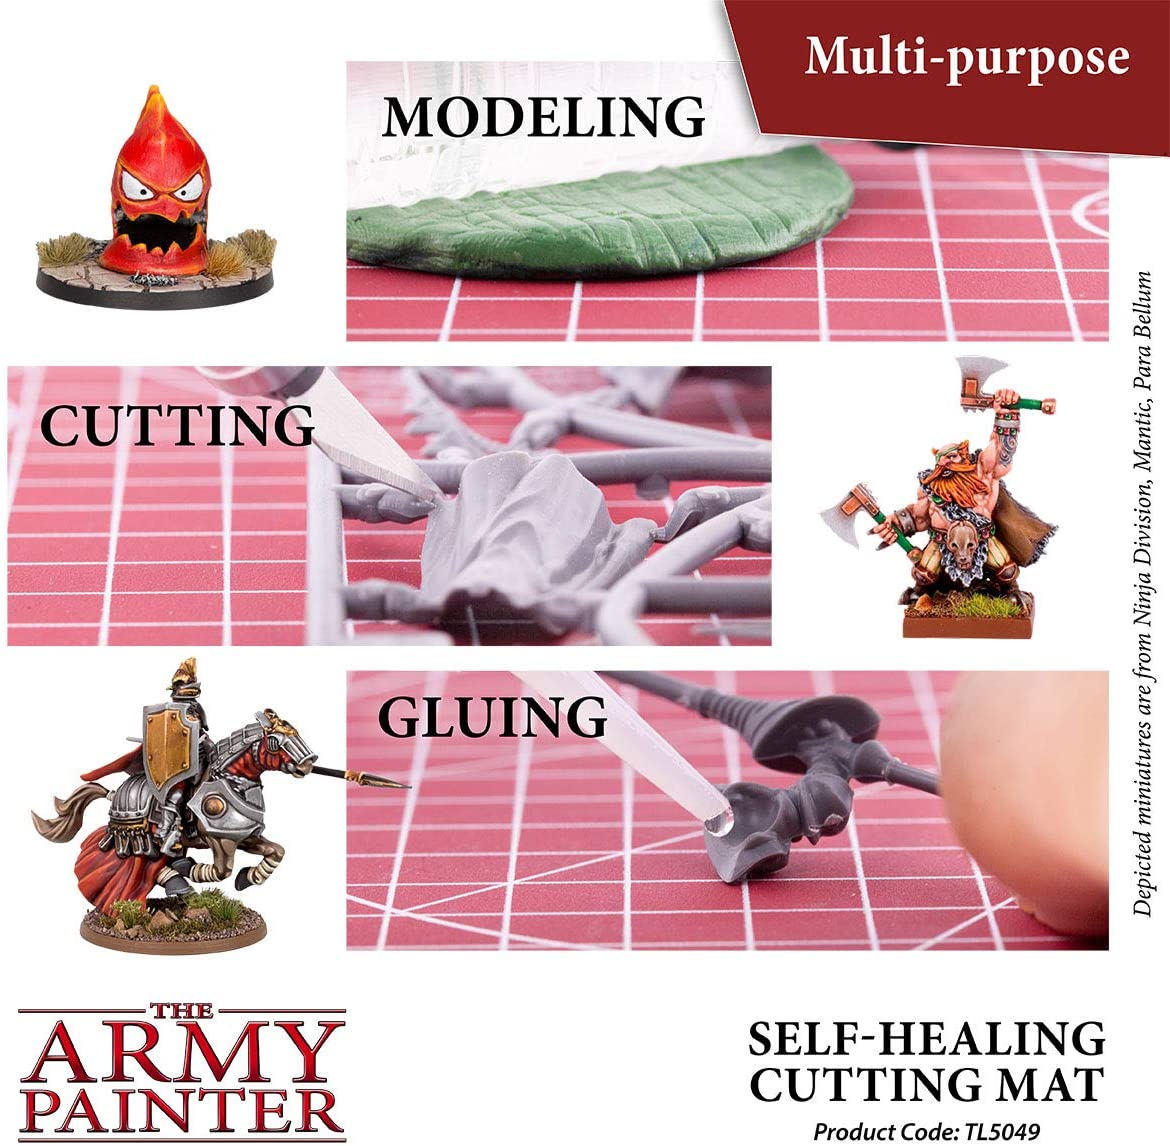 The Army Painter - Self-Healing Cutting Mat